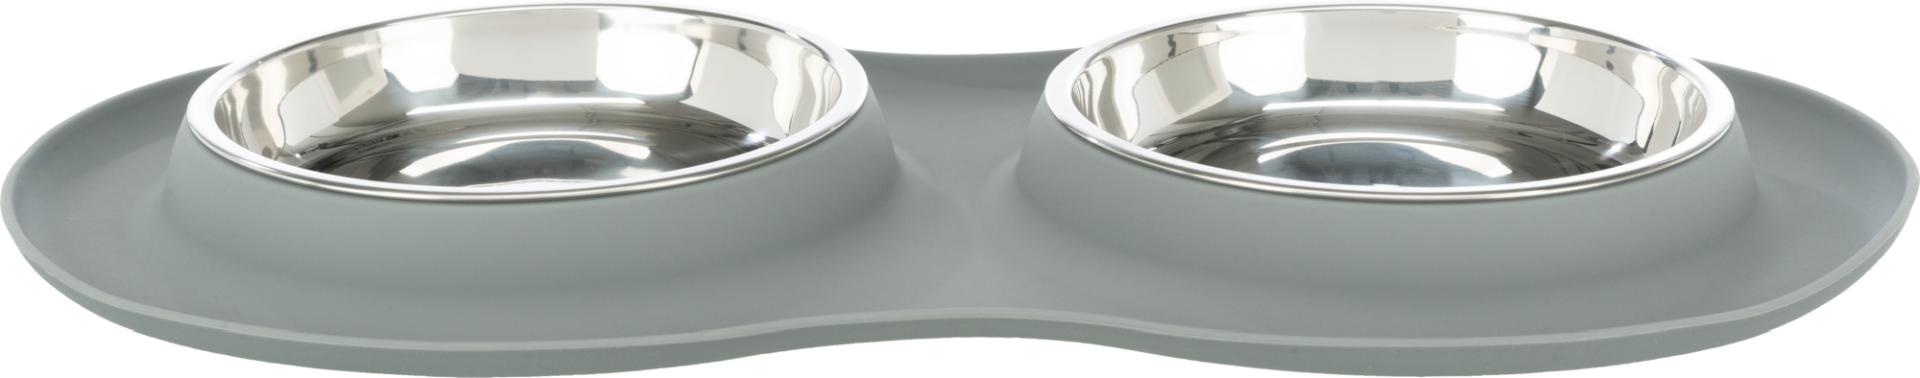 TRIXIE Napf-Set, Silikon / Edelstahl, 2 x 0,3 l / Ø 16 cm / 47 x 3 x 26 cm, grau